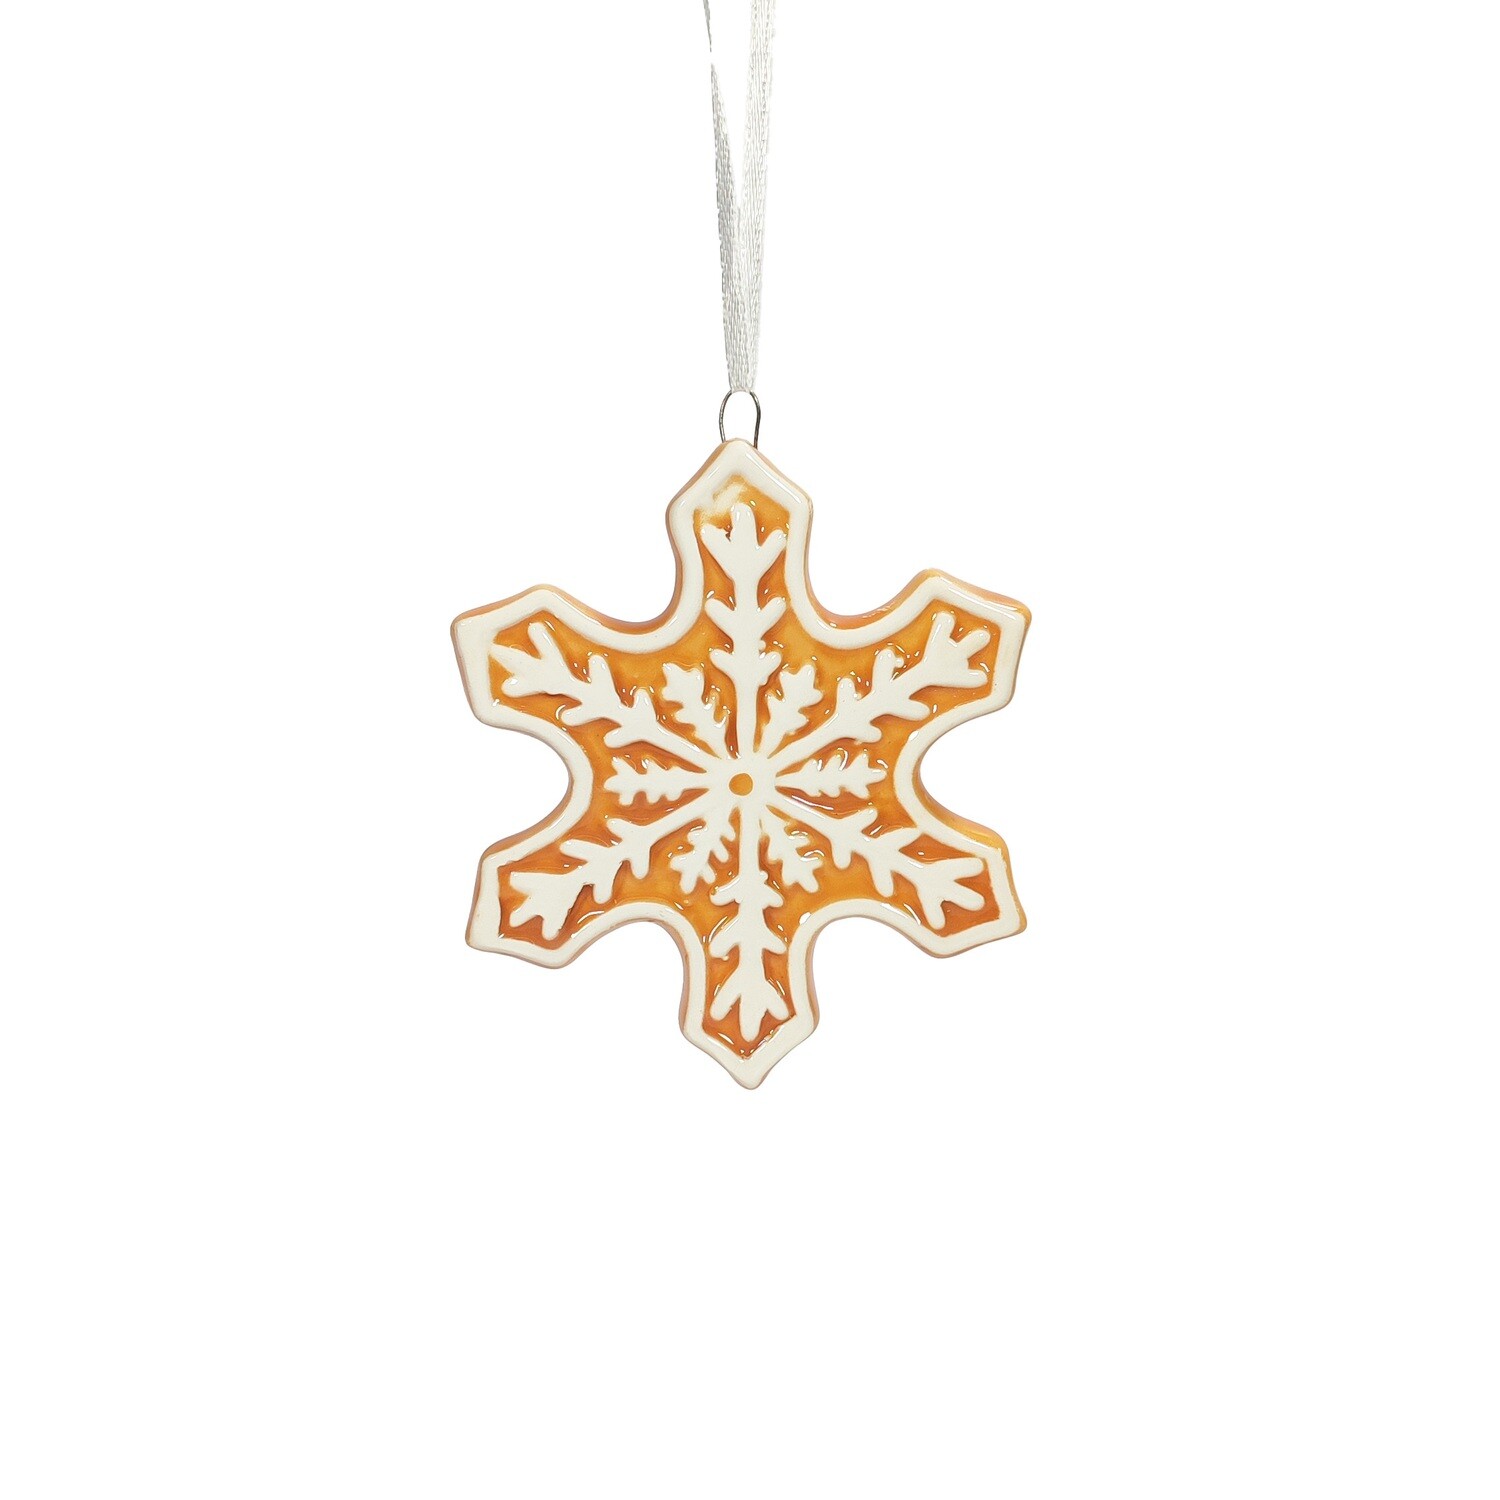 Caramel Snowflake Cookie Hanging Ornament 9x9x1cm